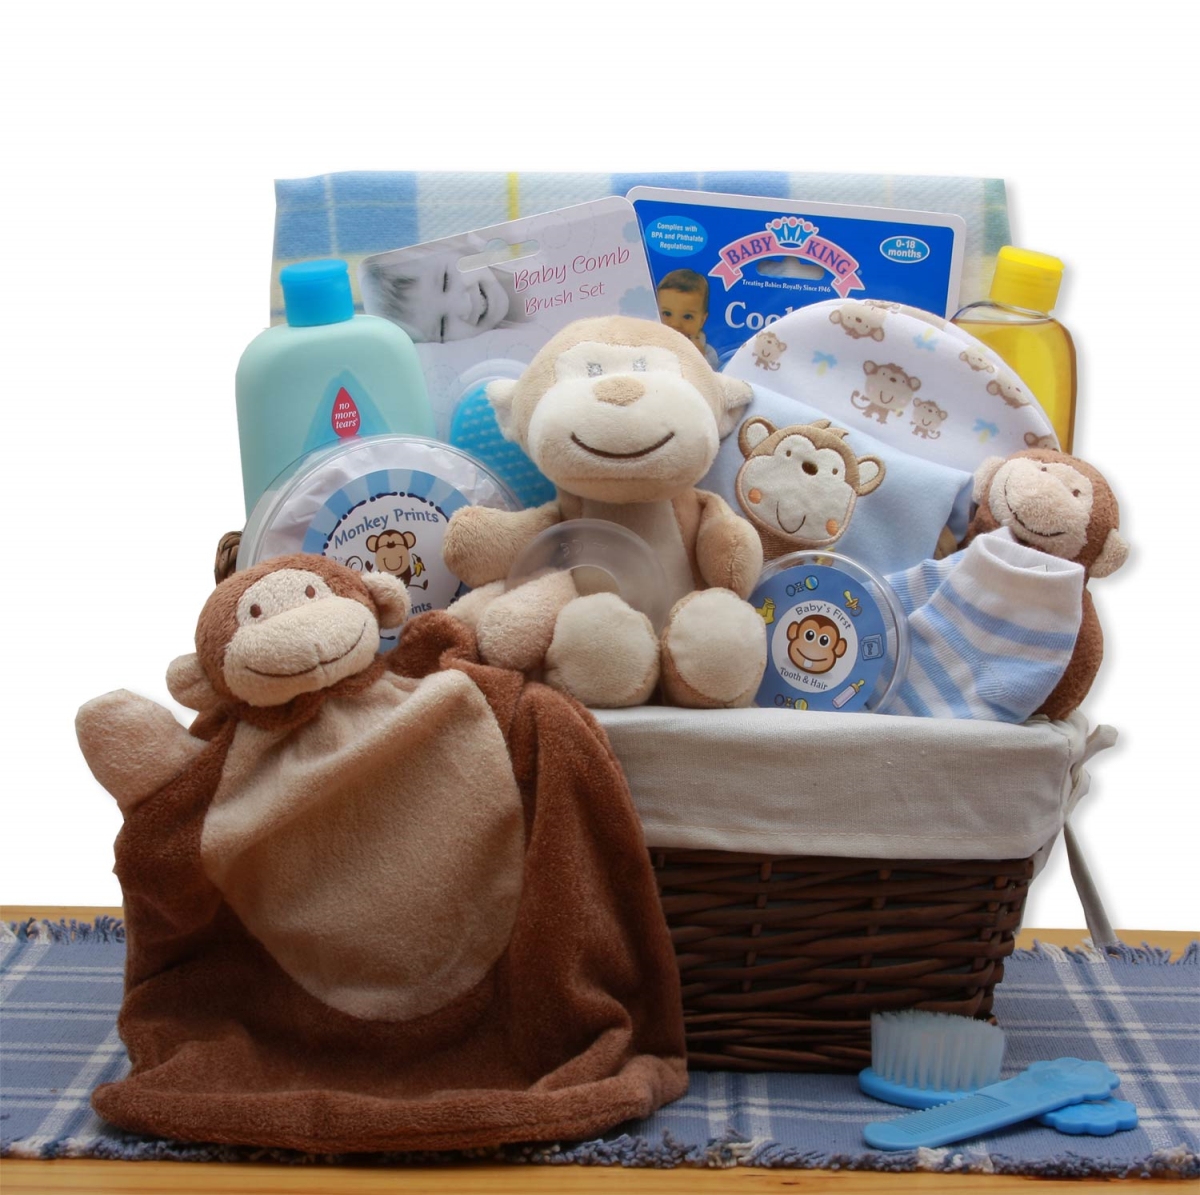 890312-b A New Little Monkey New Baby Gift Basket - Blue